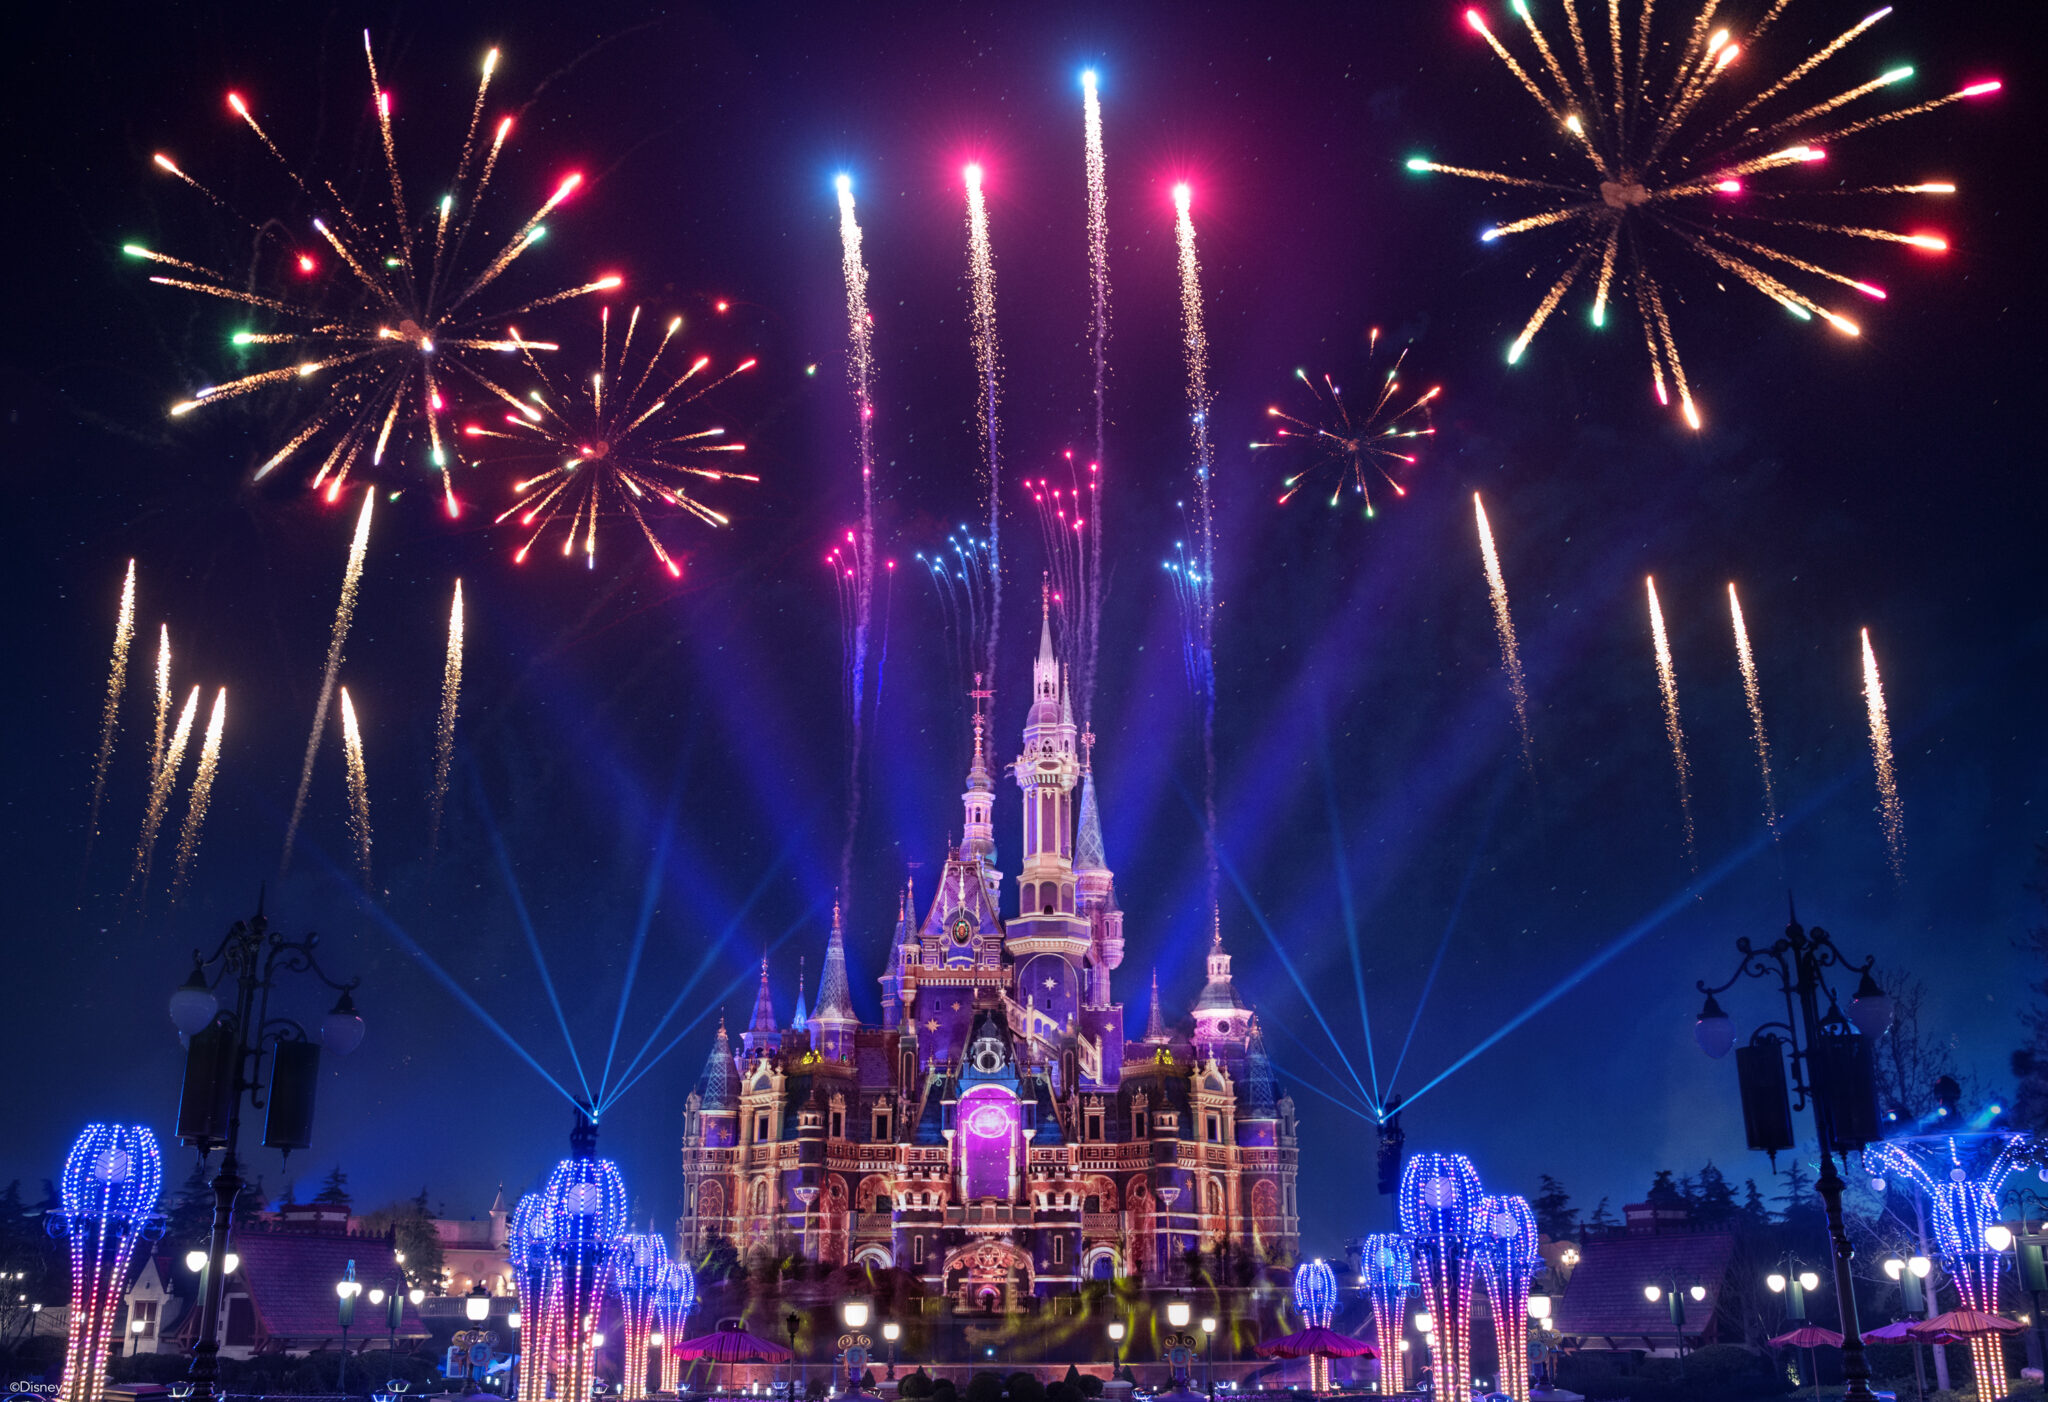 ILLUMINATE! to debut at Shanghai Disneyland on April 8 Travel to the